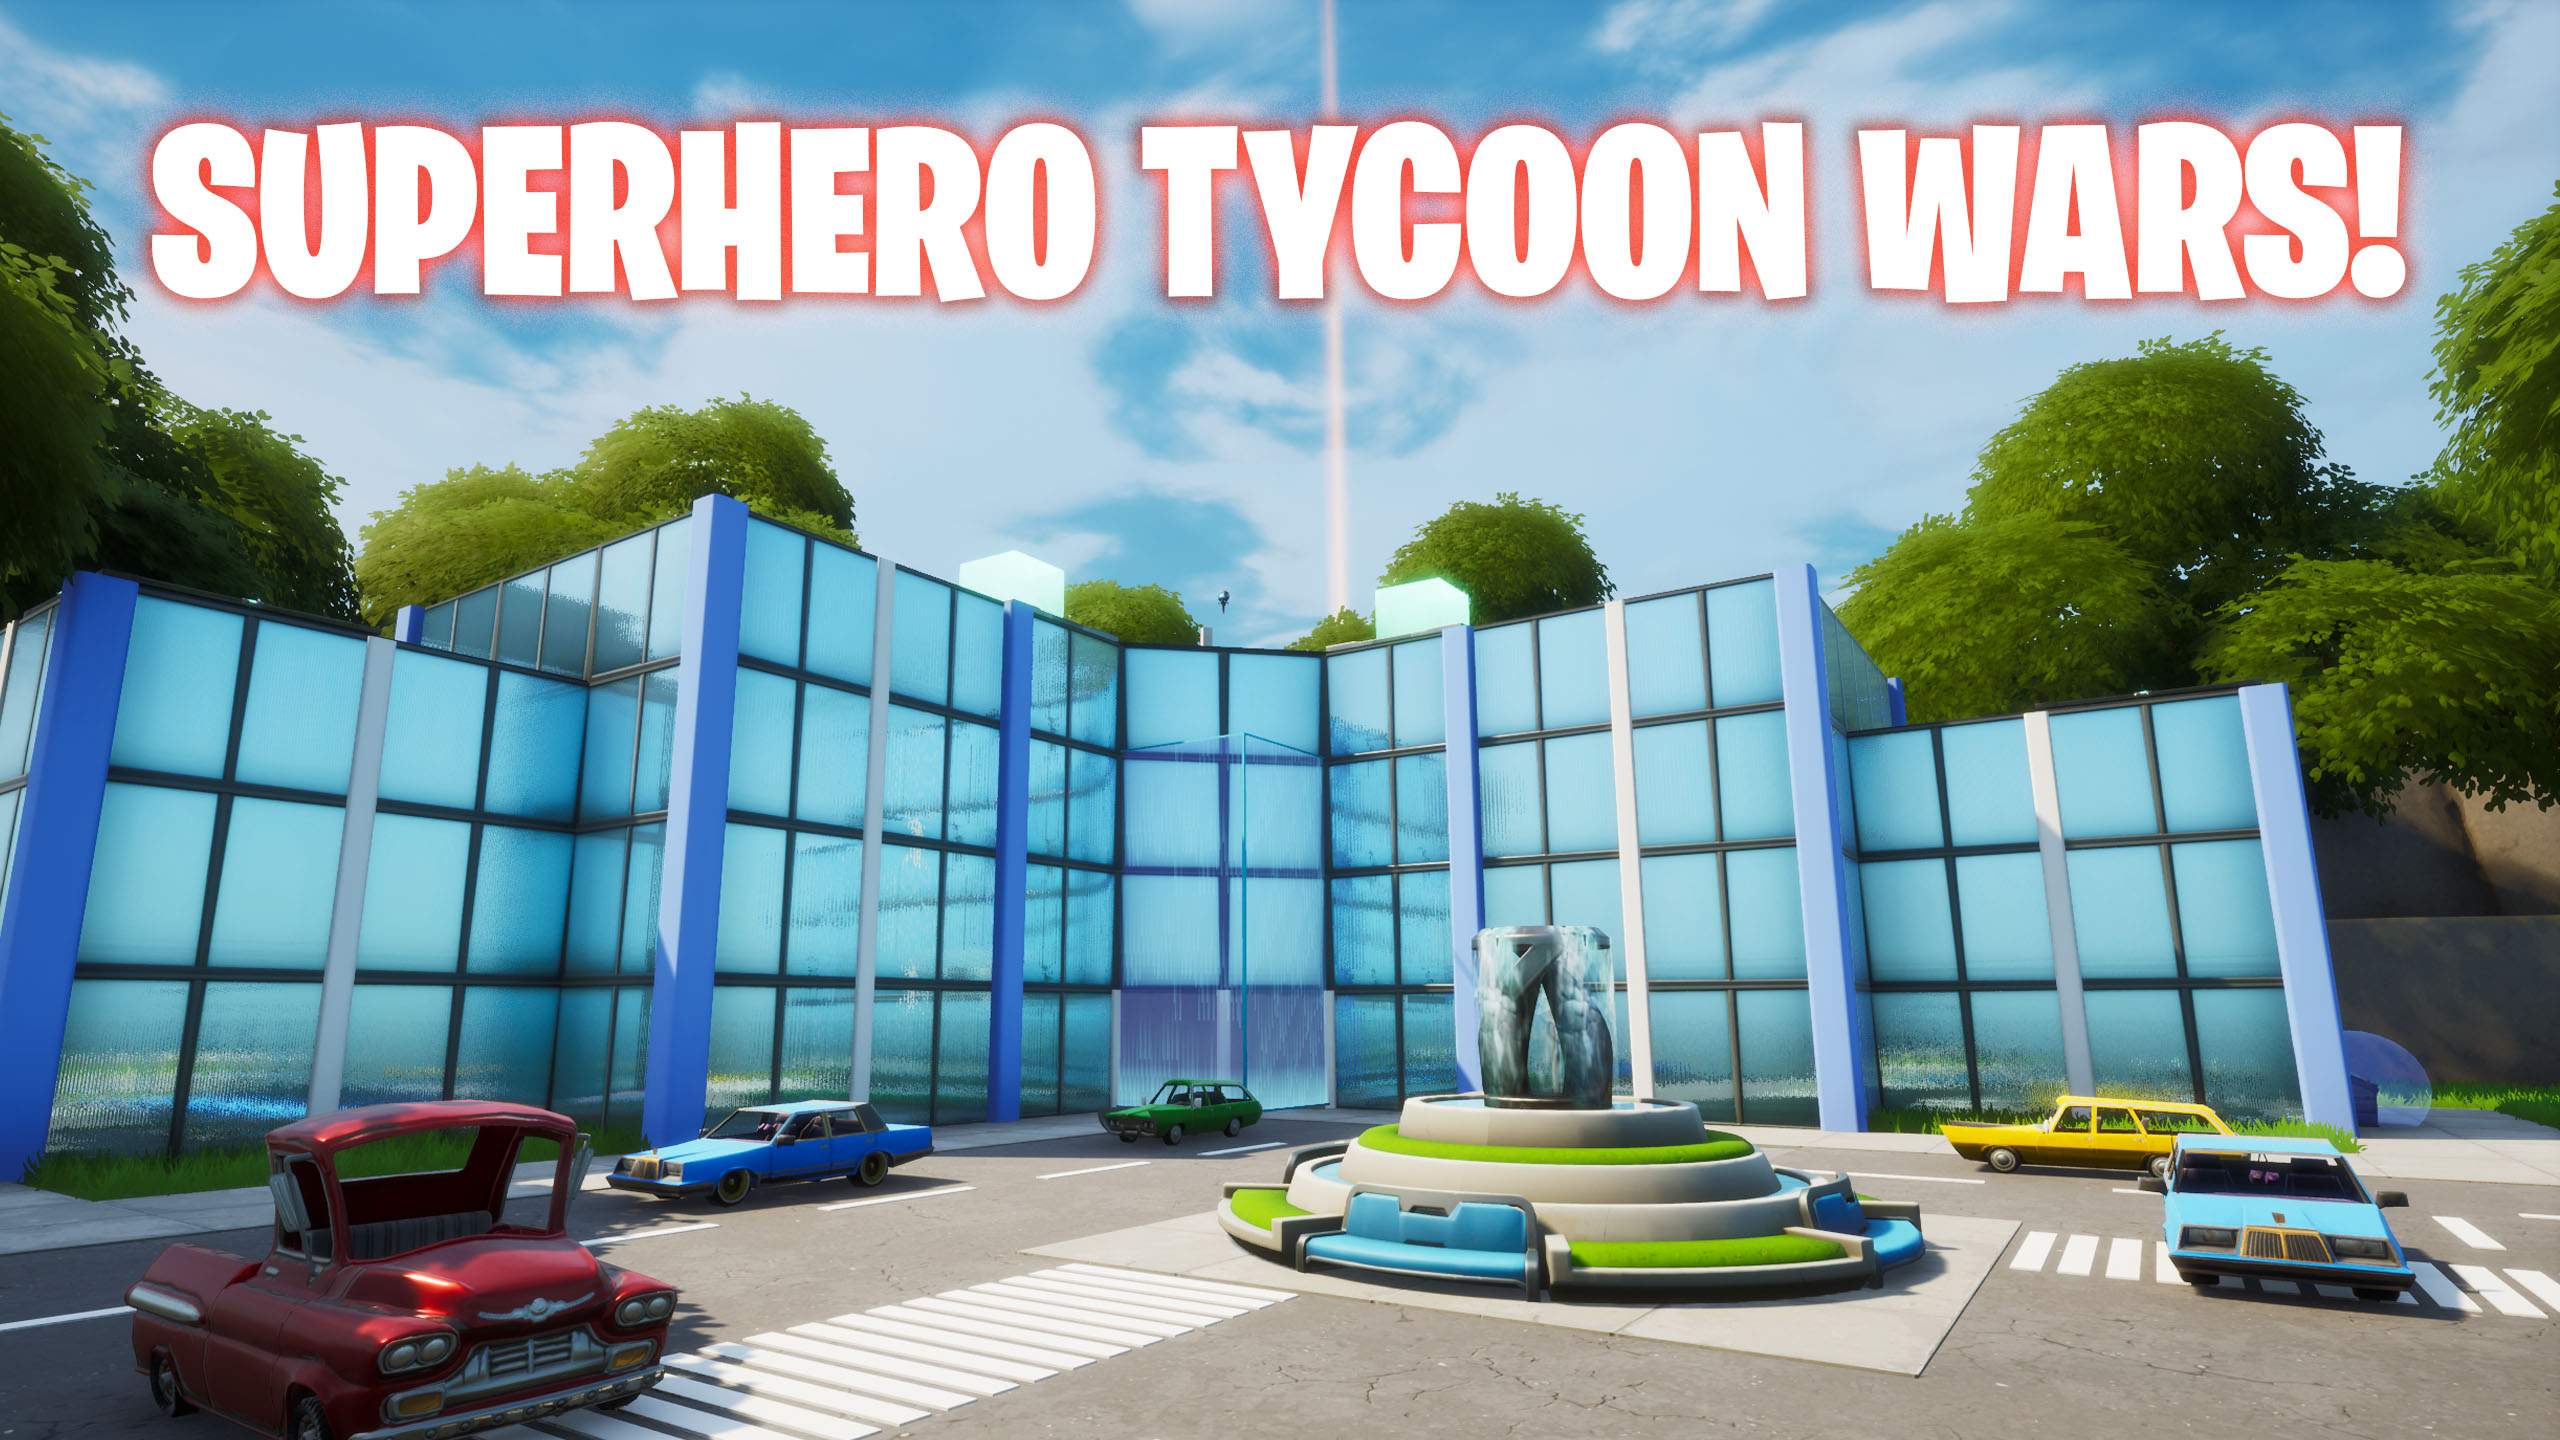 SUPERHERO TYCOON WARS! 9316-0355-4202